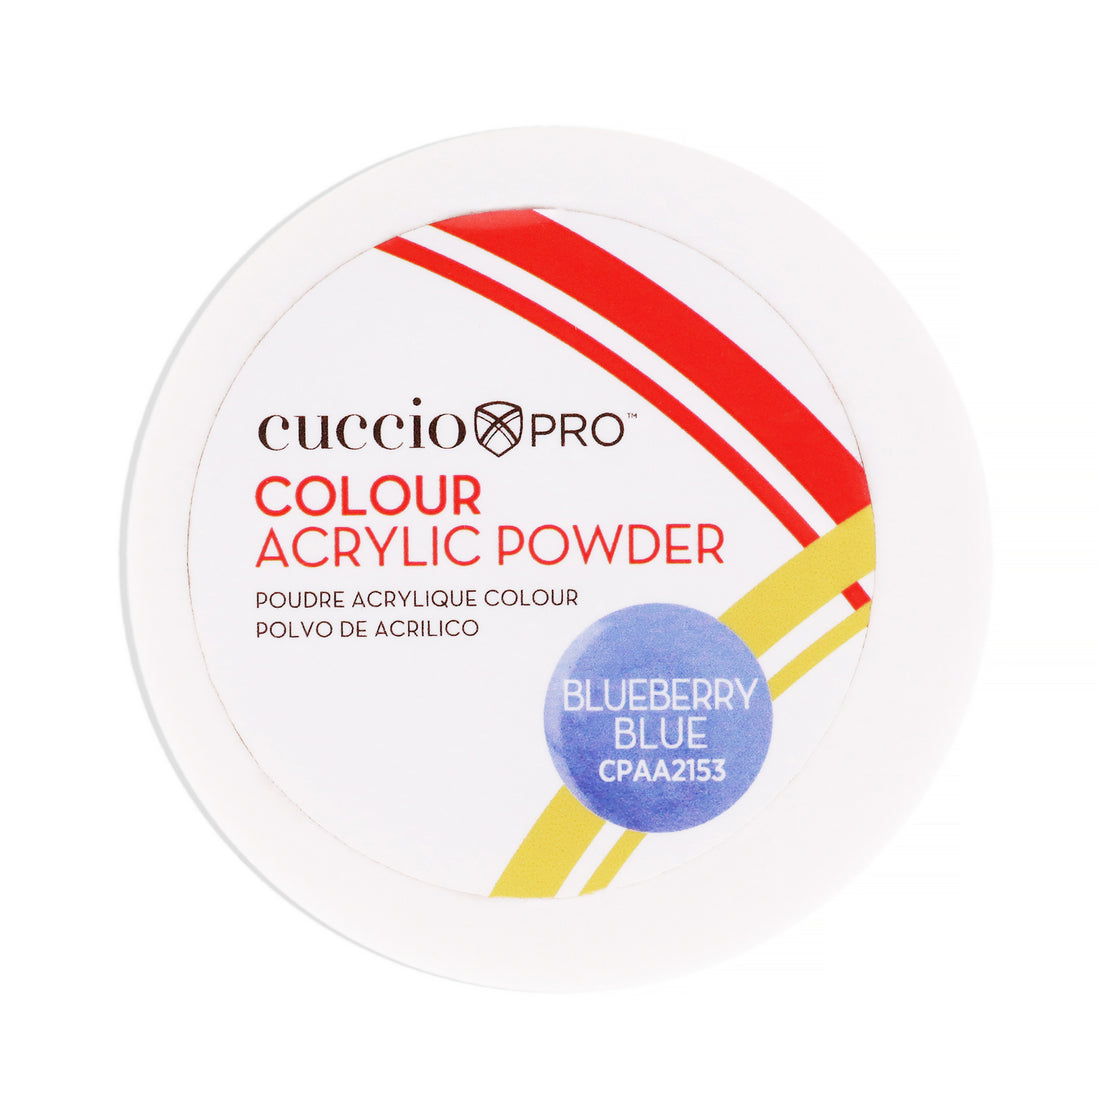 Colour Acrylic Powder - Blueberry Blue by Cuccio PRO for Women - 1.6 oz Acrylic Powder